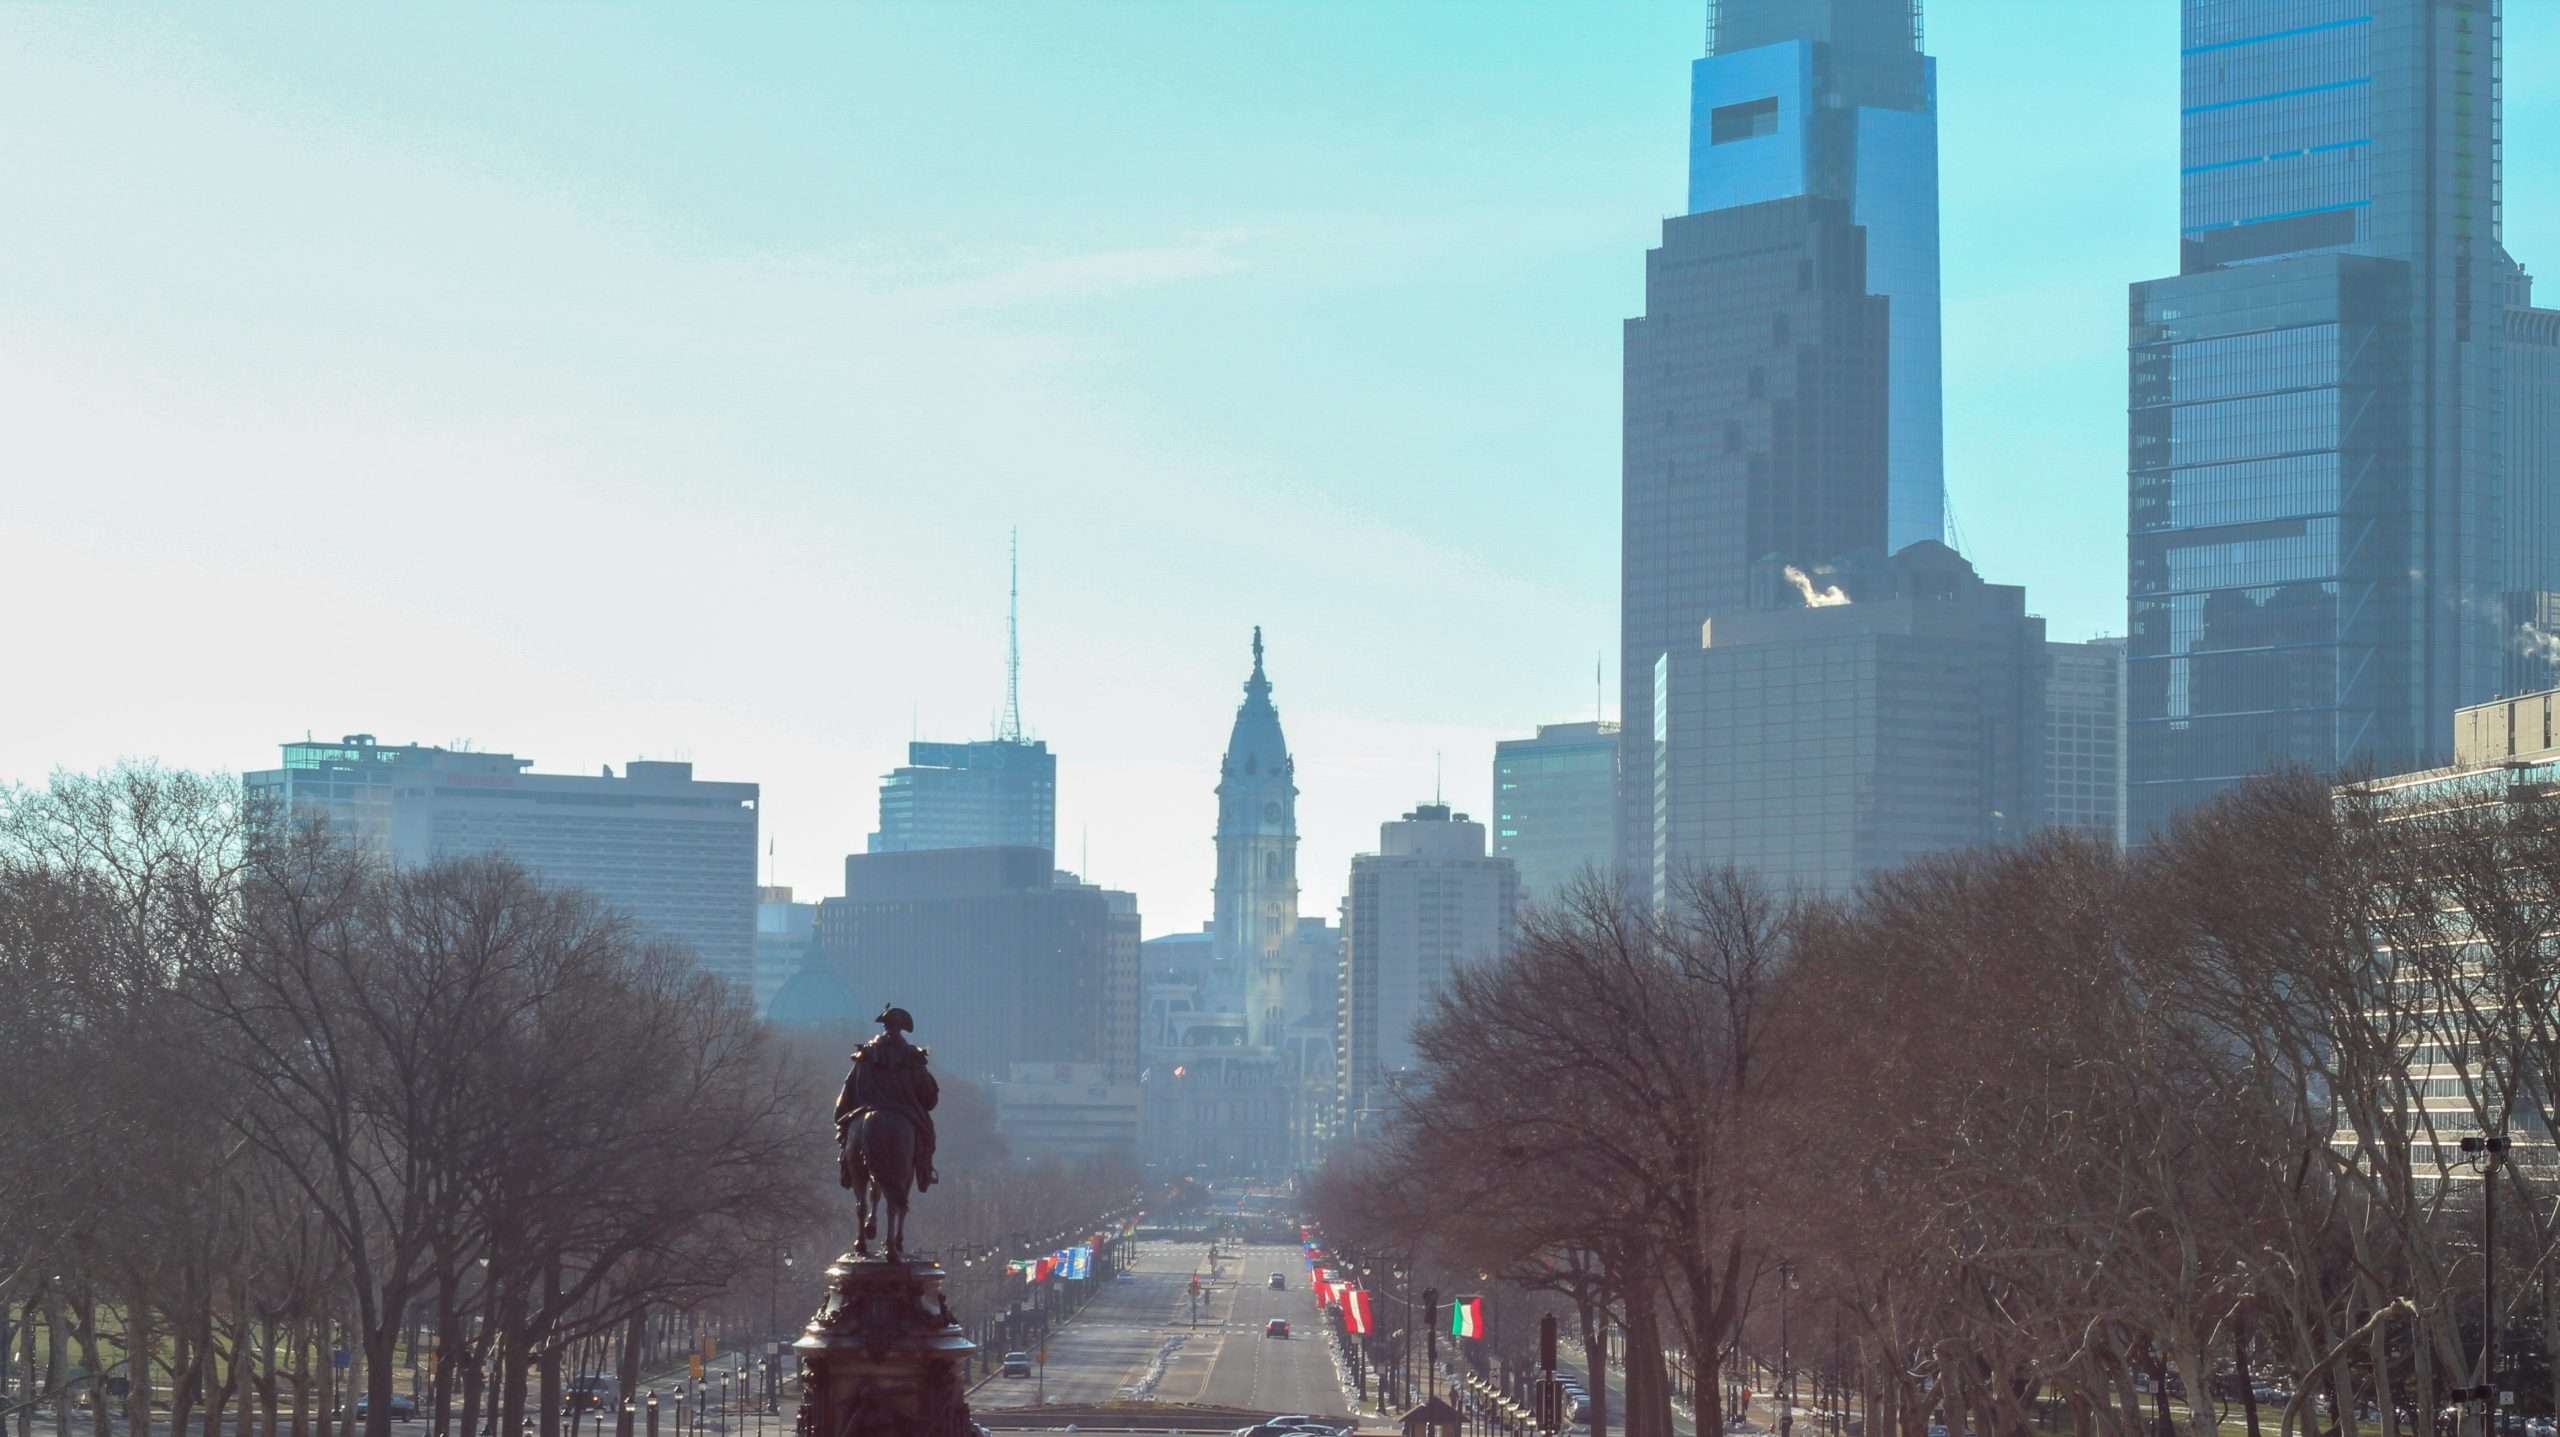 Philadelphia skyline, with